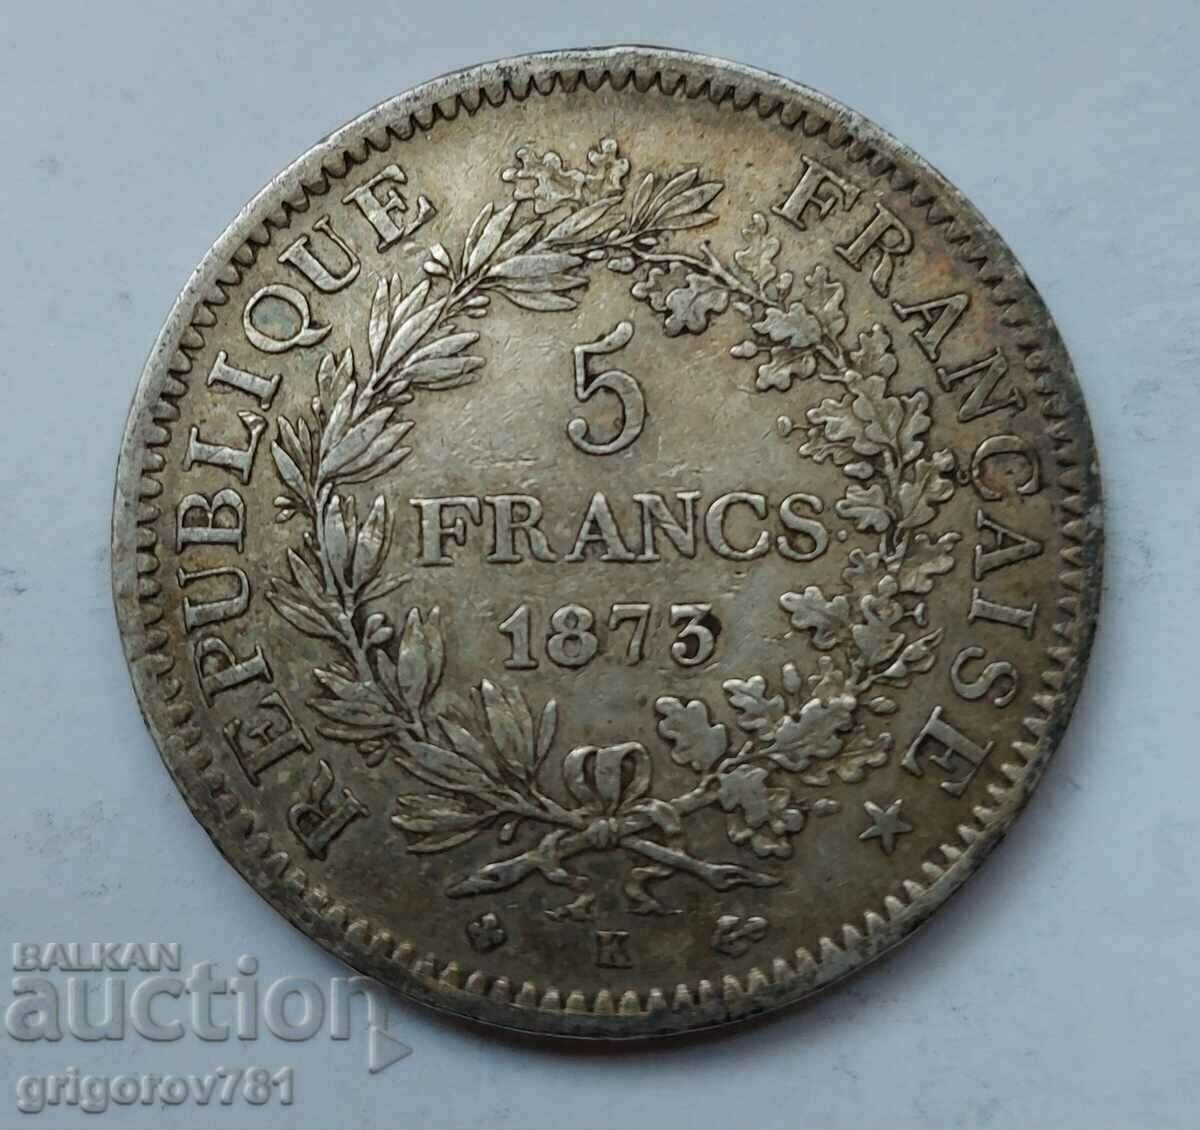 5 Francs Silver France 1873 K - Silver Coin #210